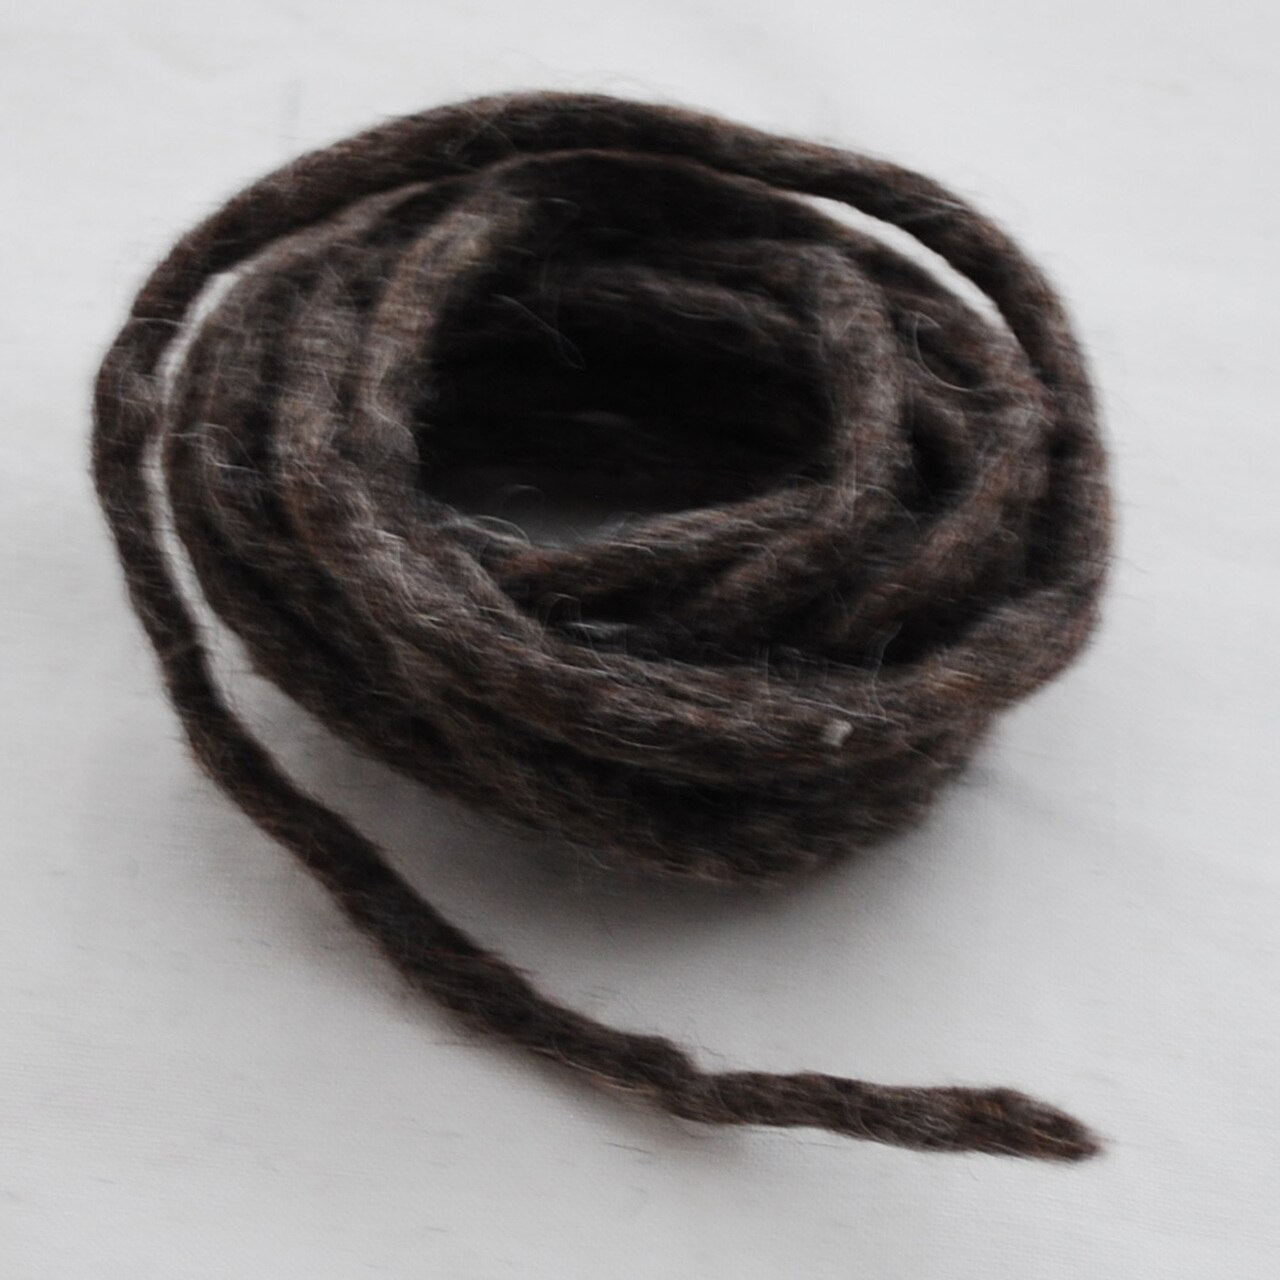 Handmade 100% Wool Felt Cord - Brown Mix